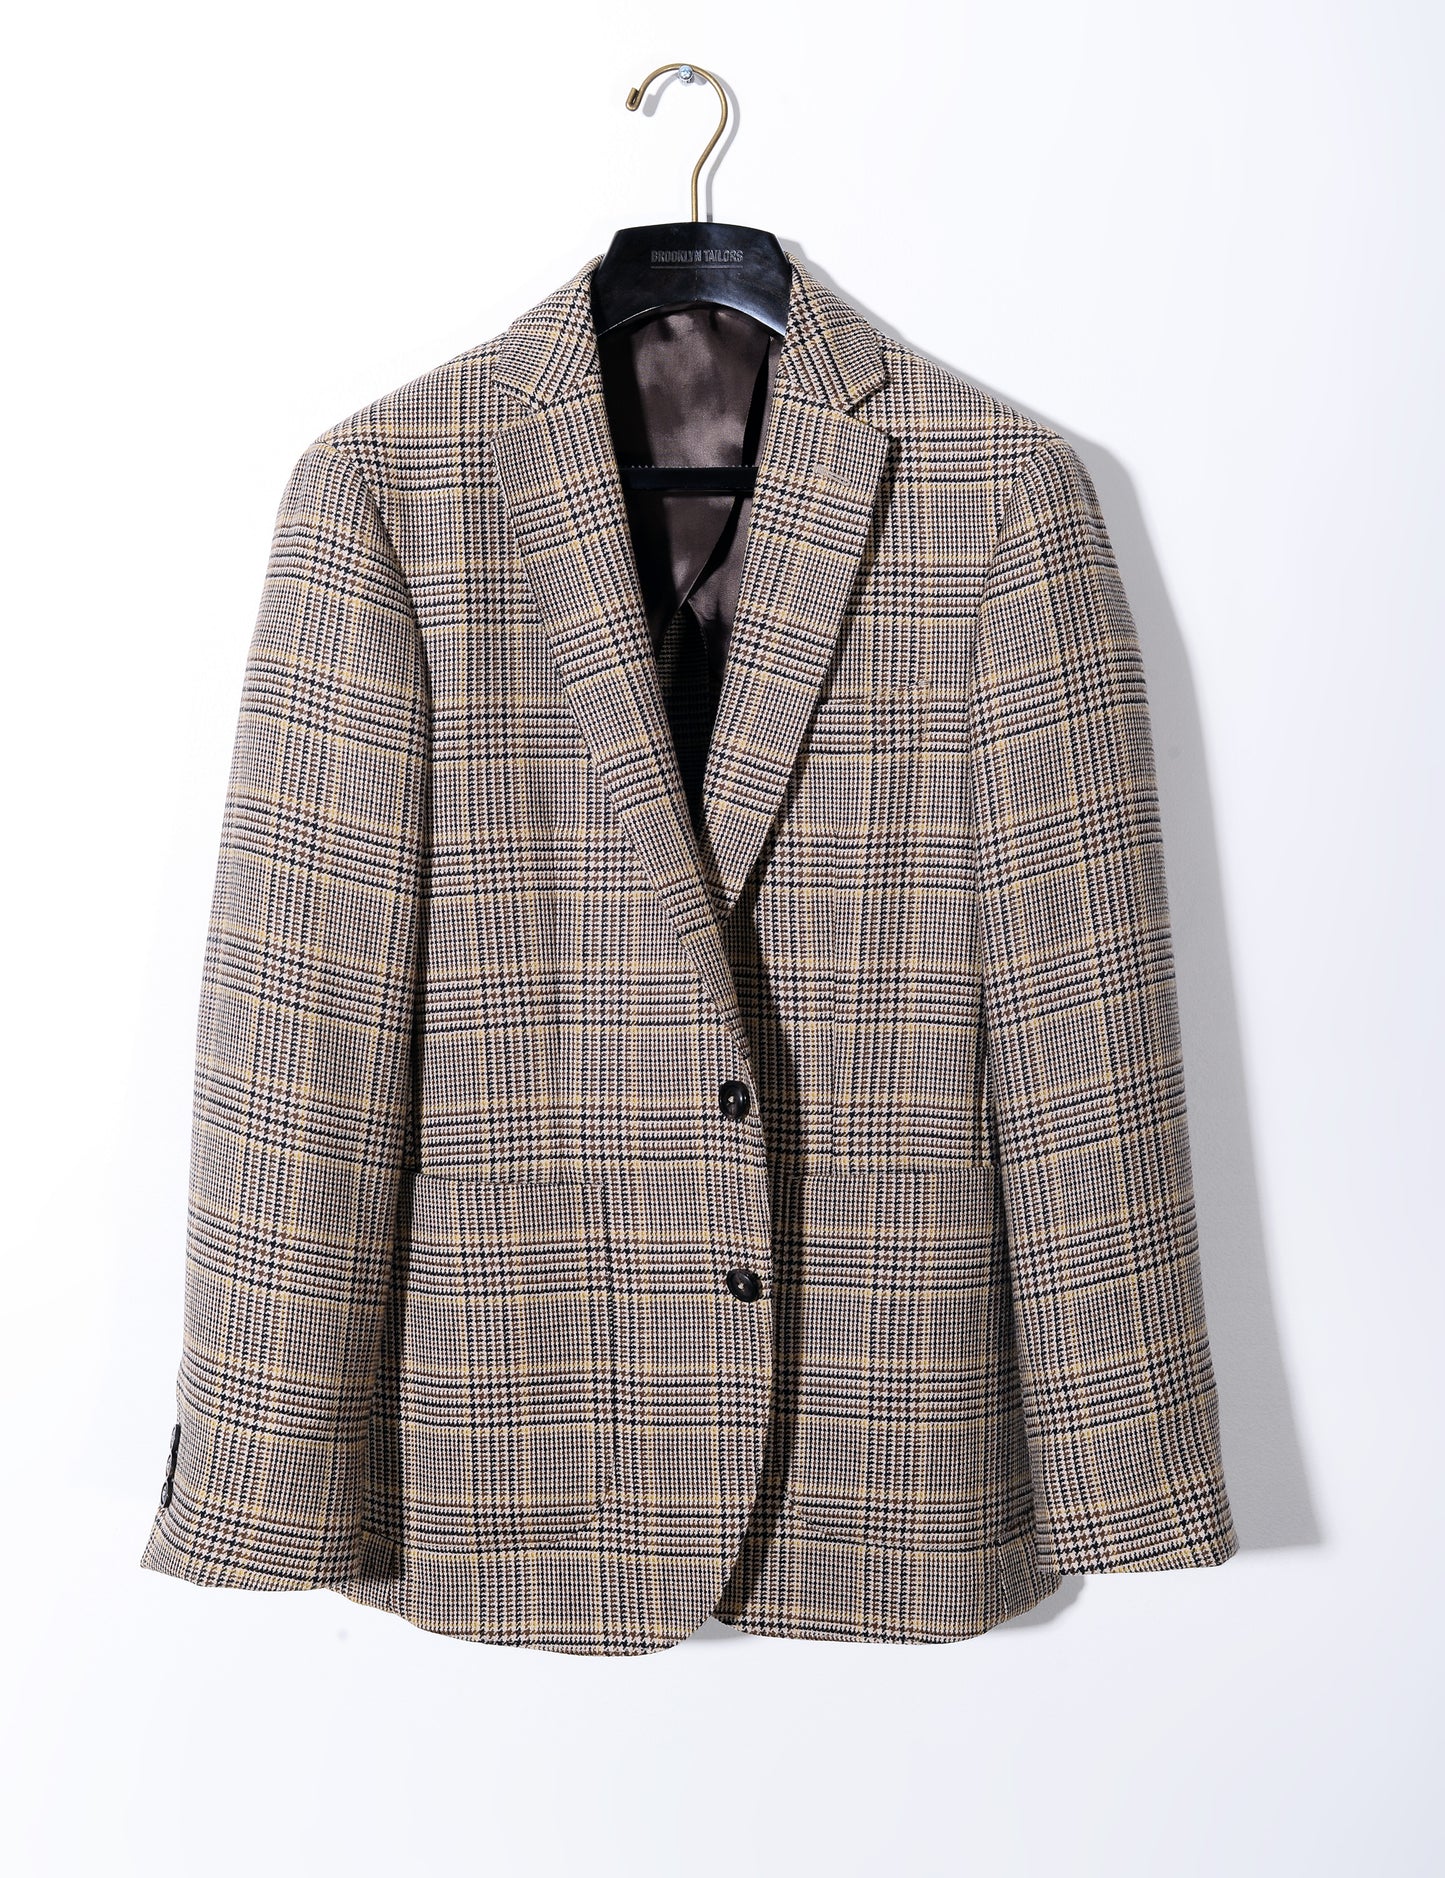 BKT35 Unstructured Jacket in Vintage Wool - English Plaid